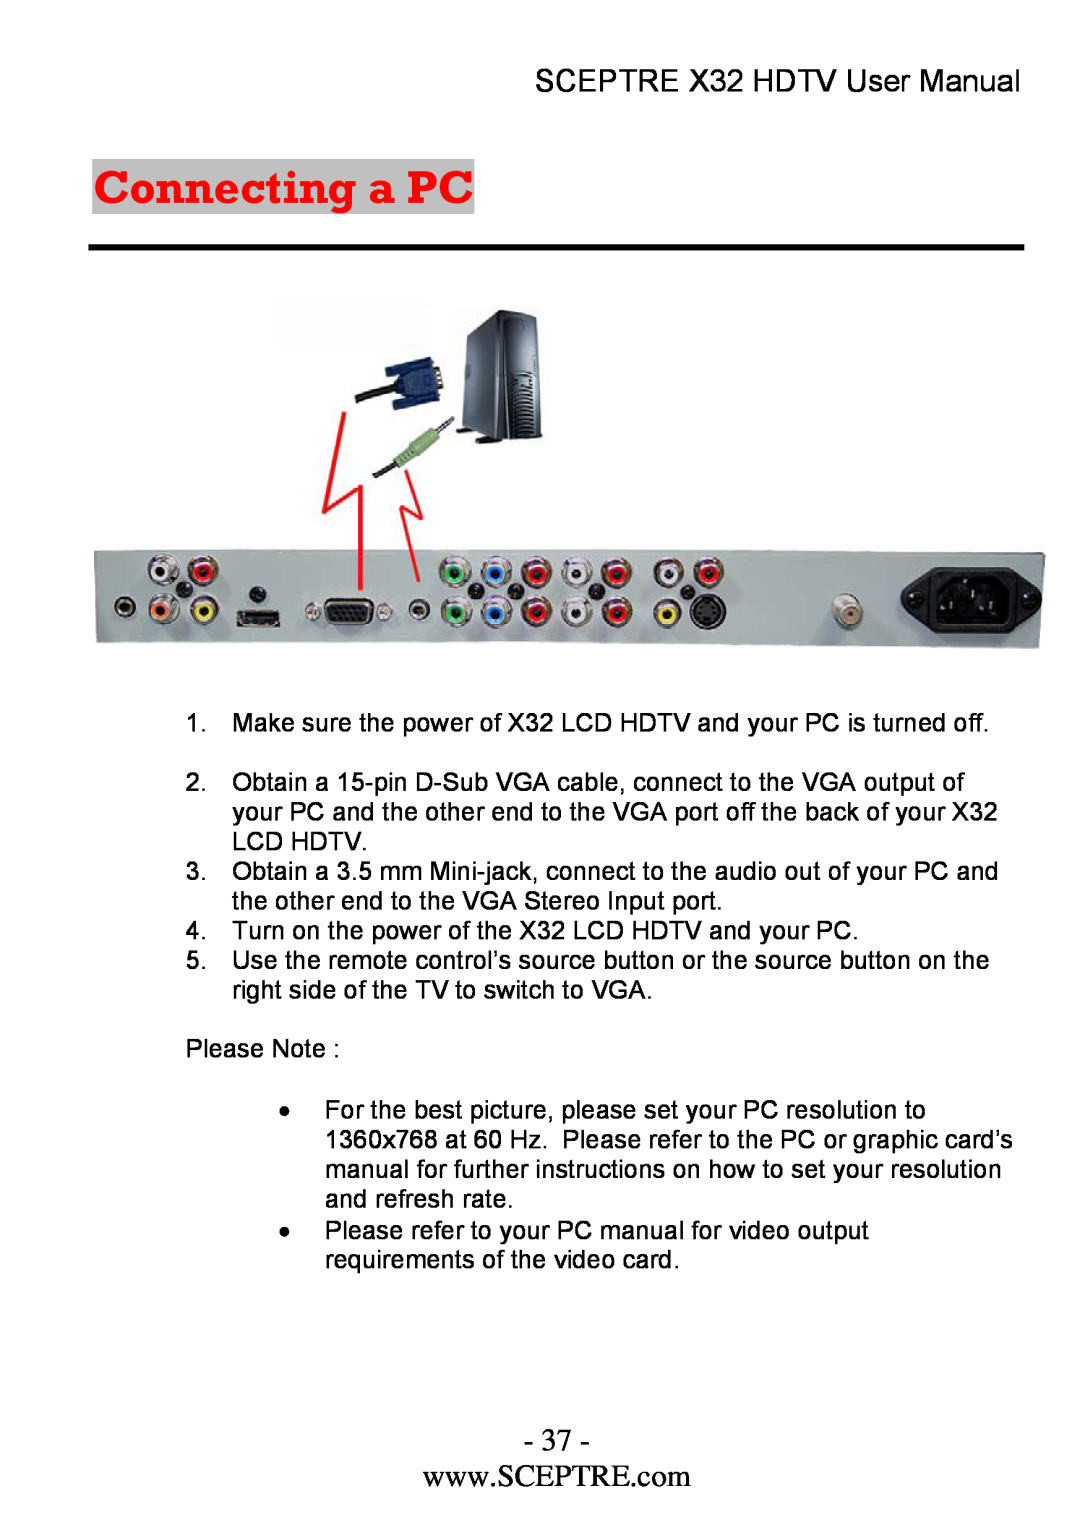 Sceptre Technologies x32 user manual Connecting a PC, SCEPTRE X32 HDTV User Manual 